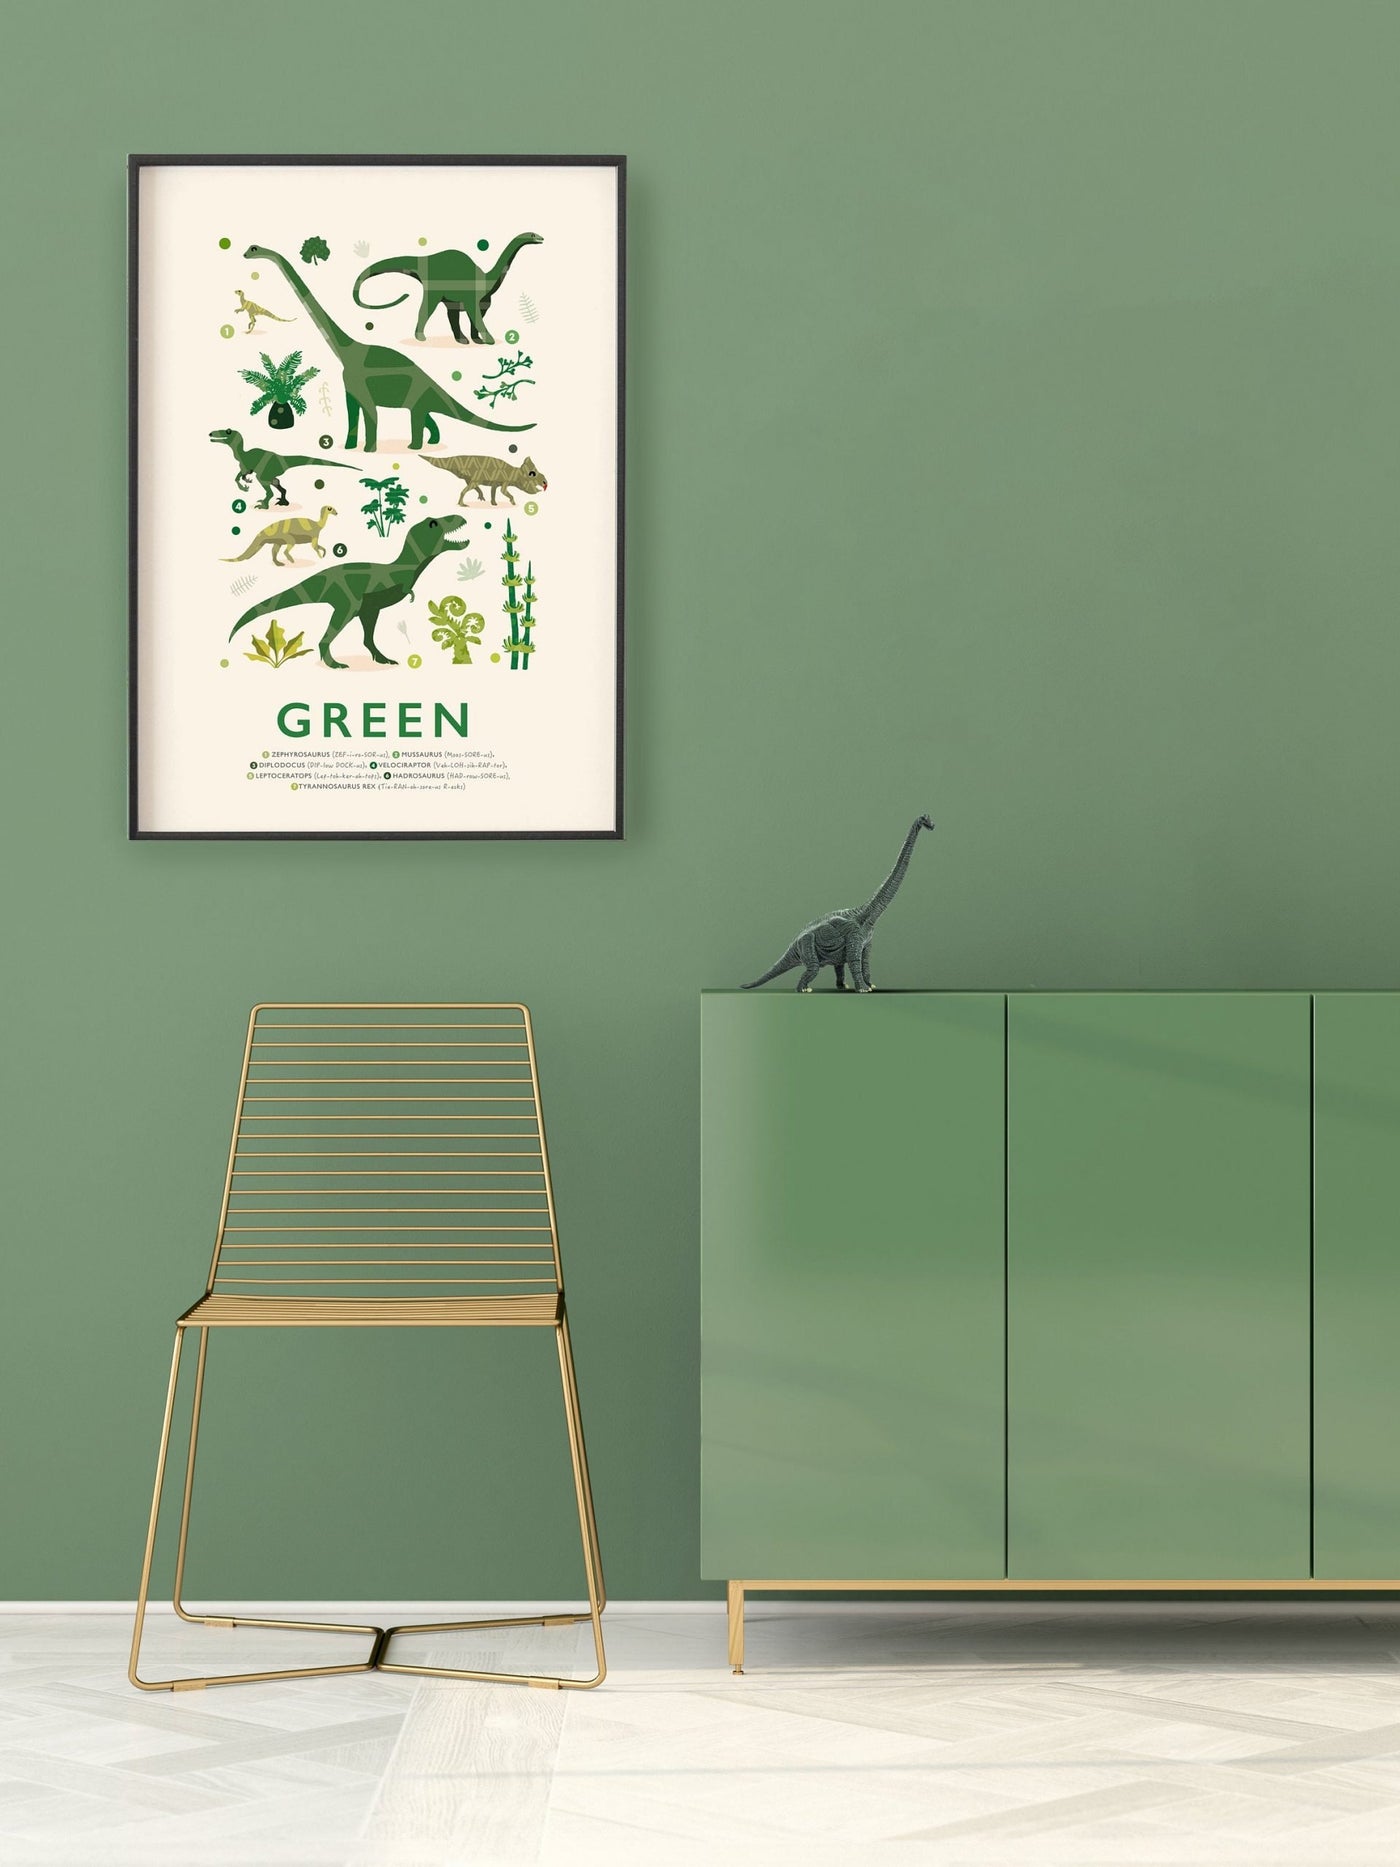 Green Dinosaur Print - PaperPaintPixels